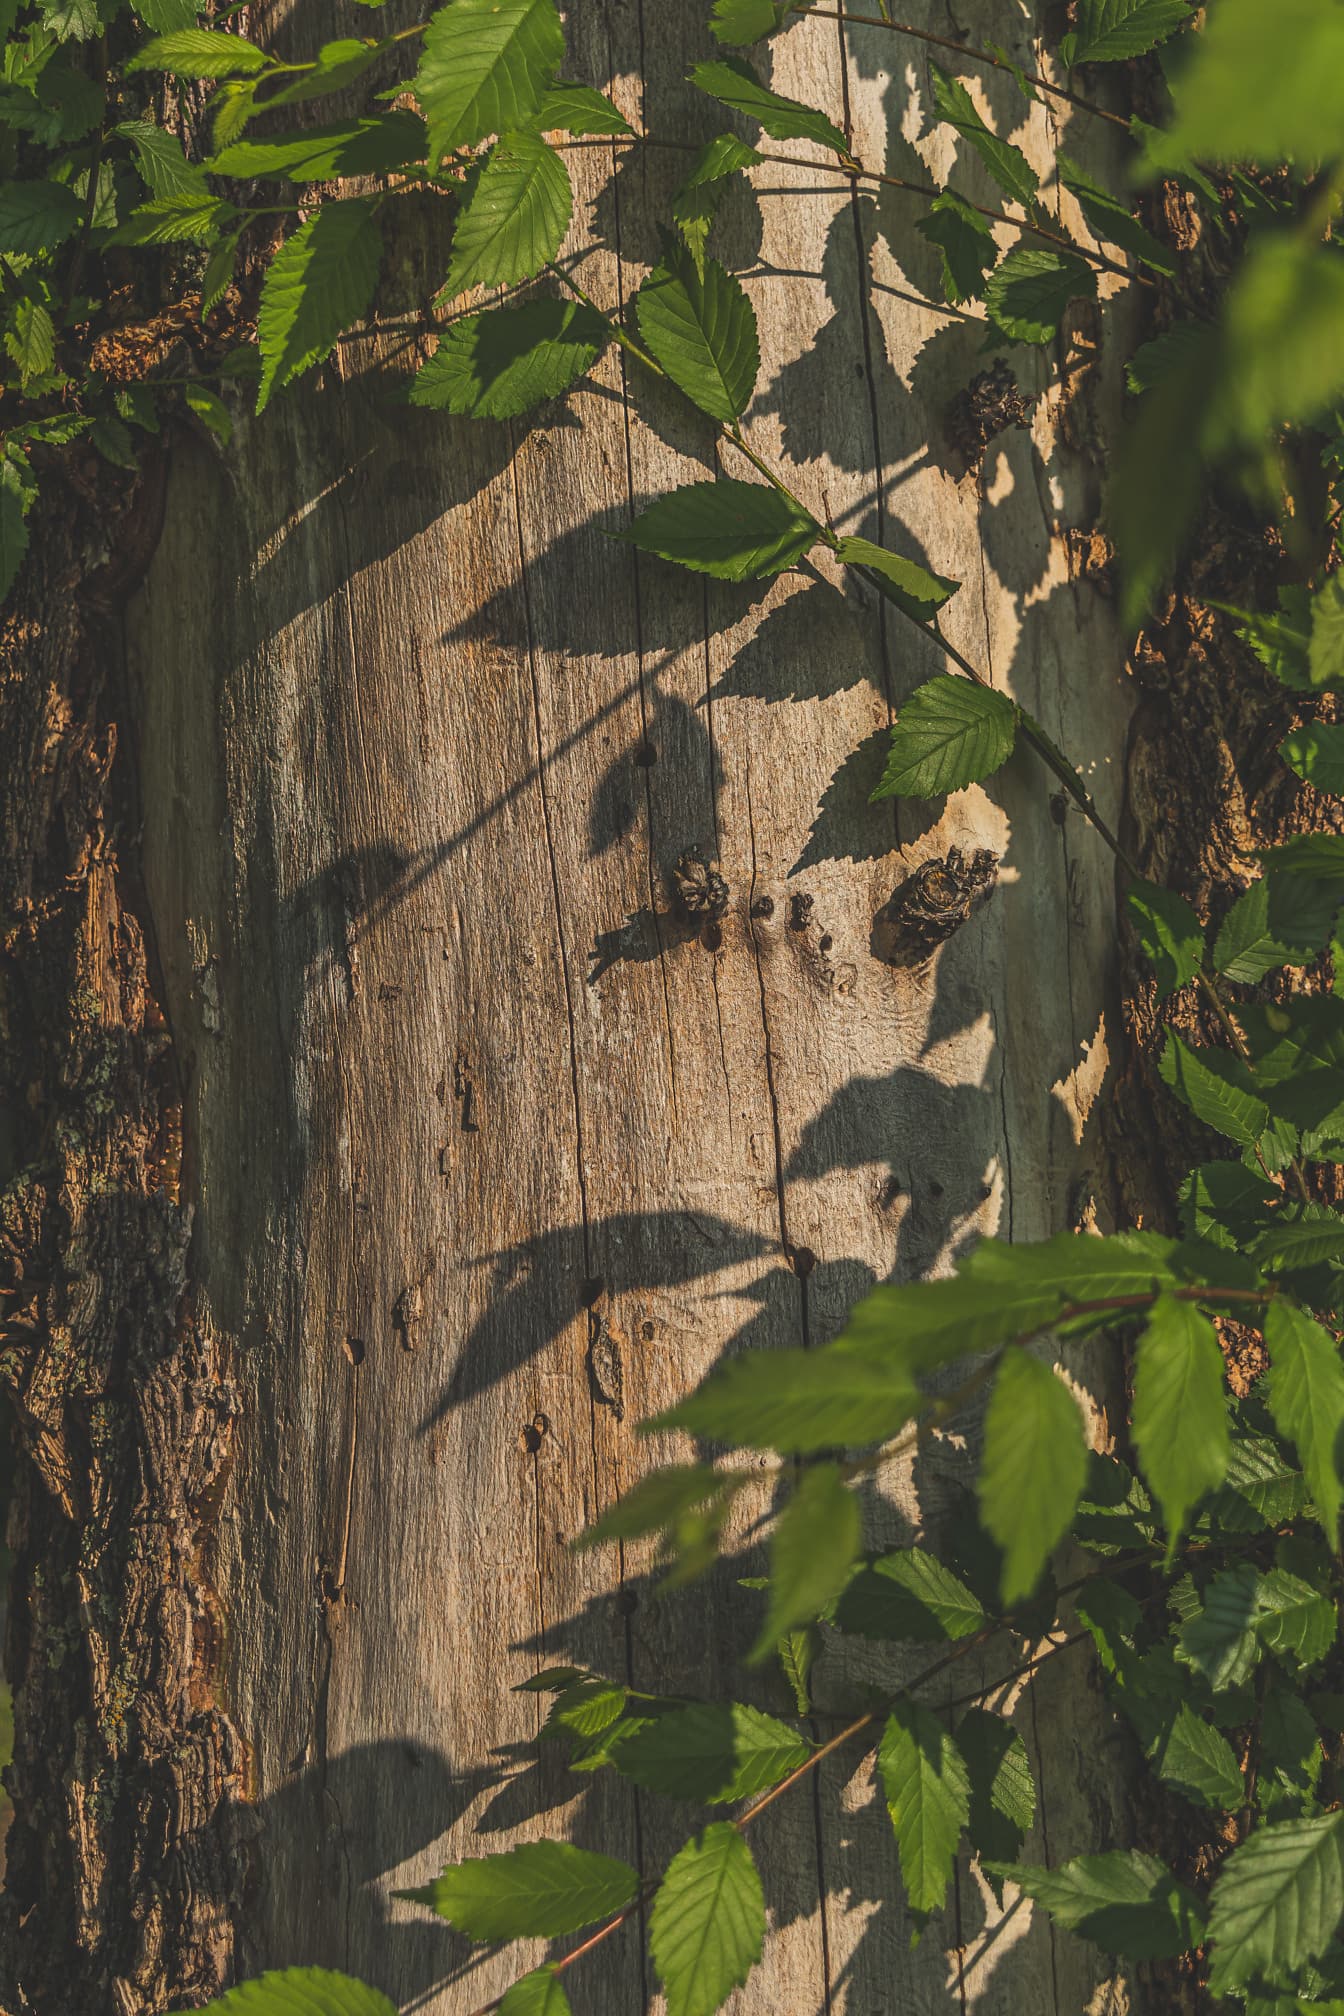 Tampilan close-up kulit batang pohon dalam bayangan pada daun hijau